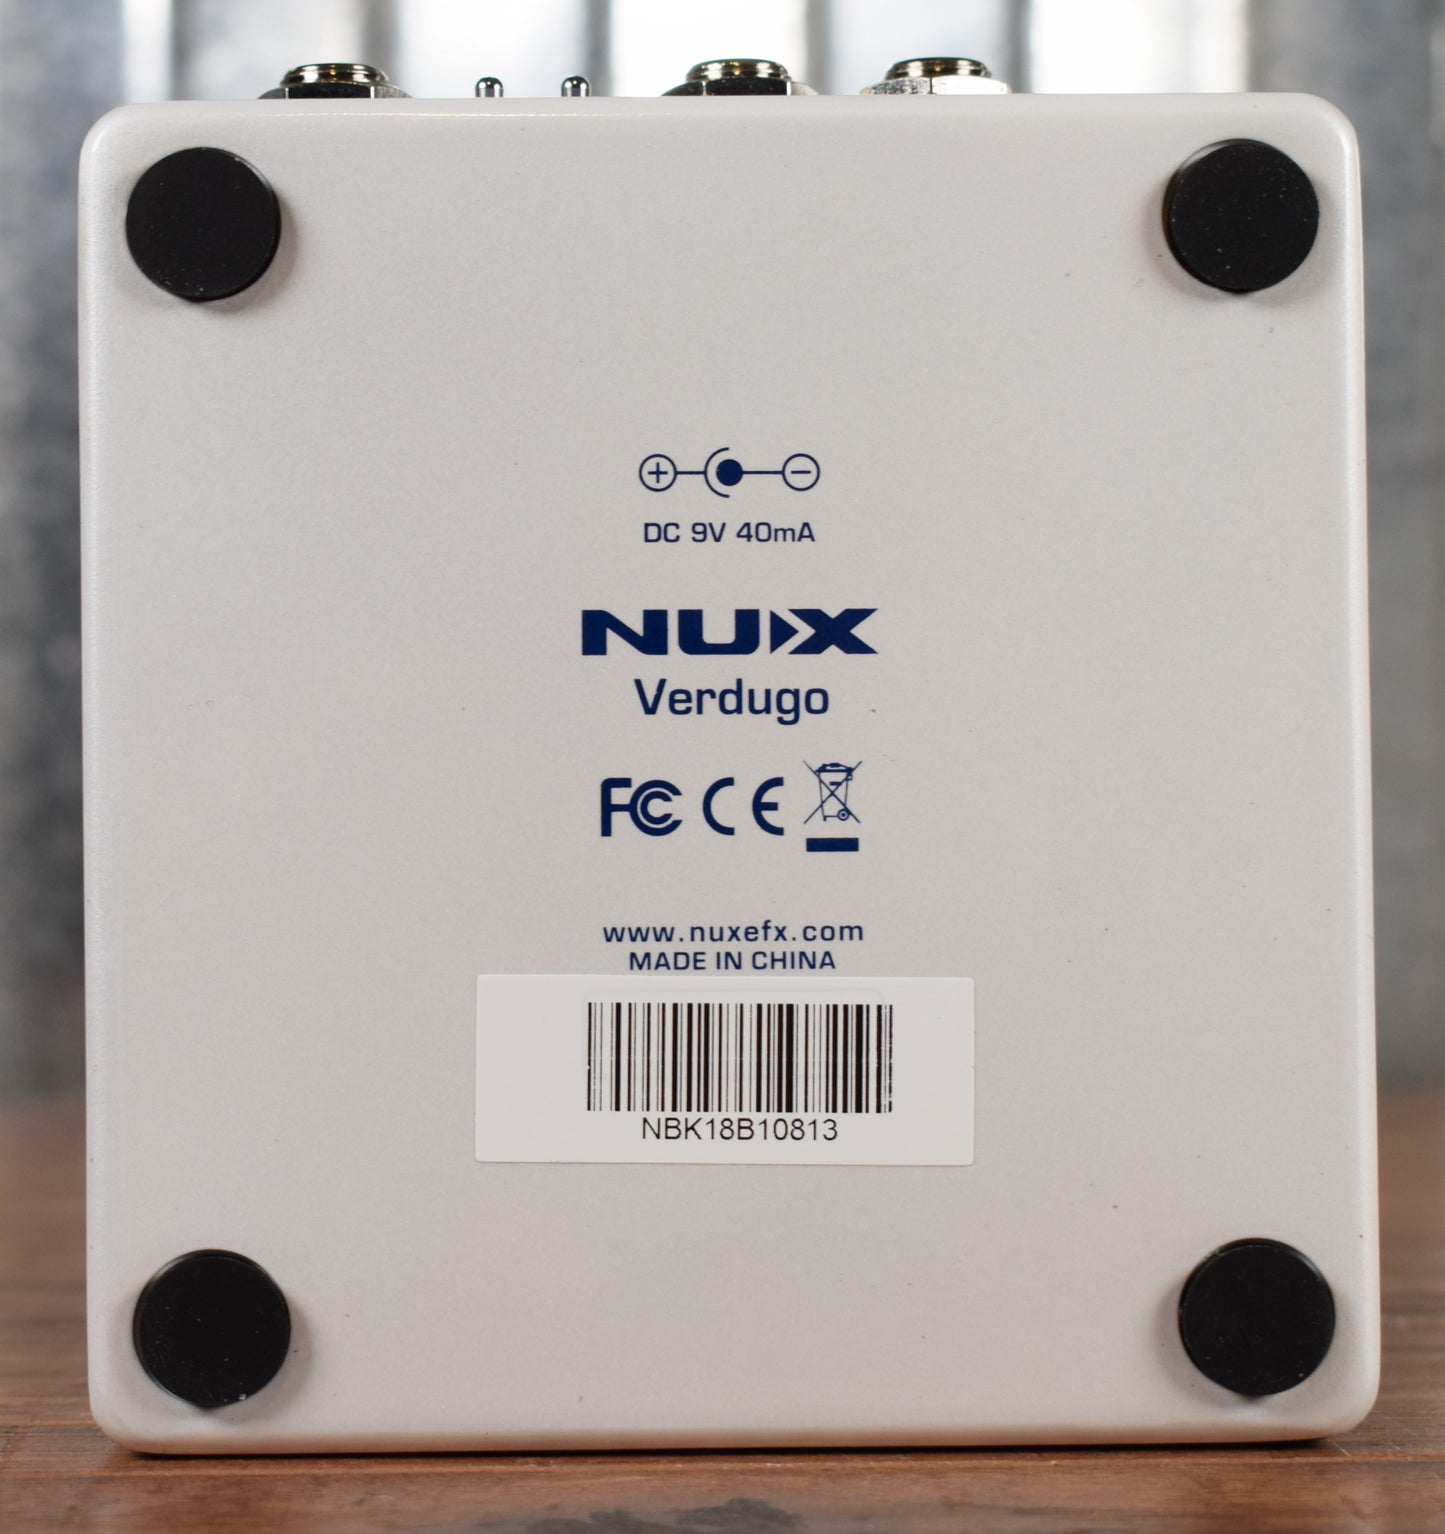 NUX NBK-5 Masamune Boost & Compressor Guitar Effect Pedal